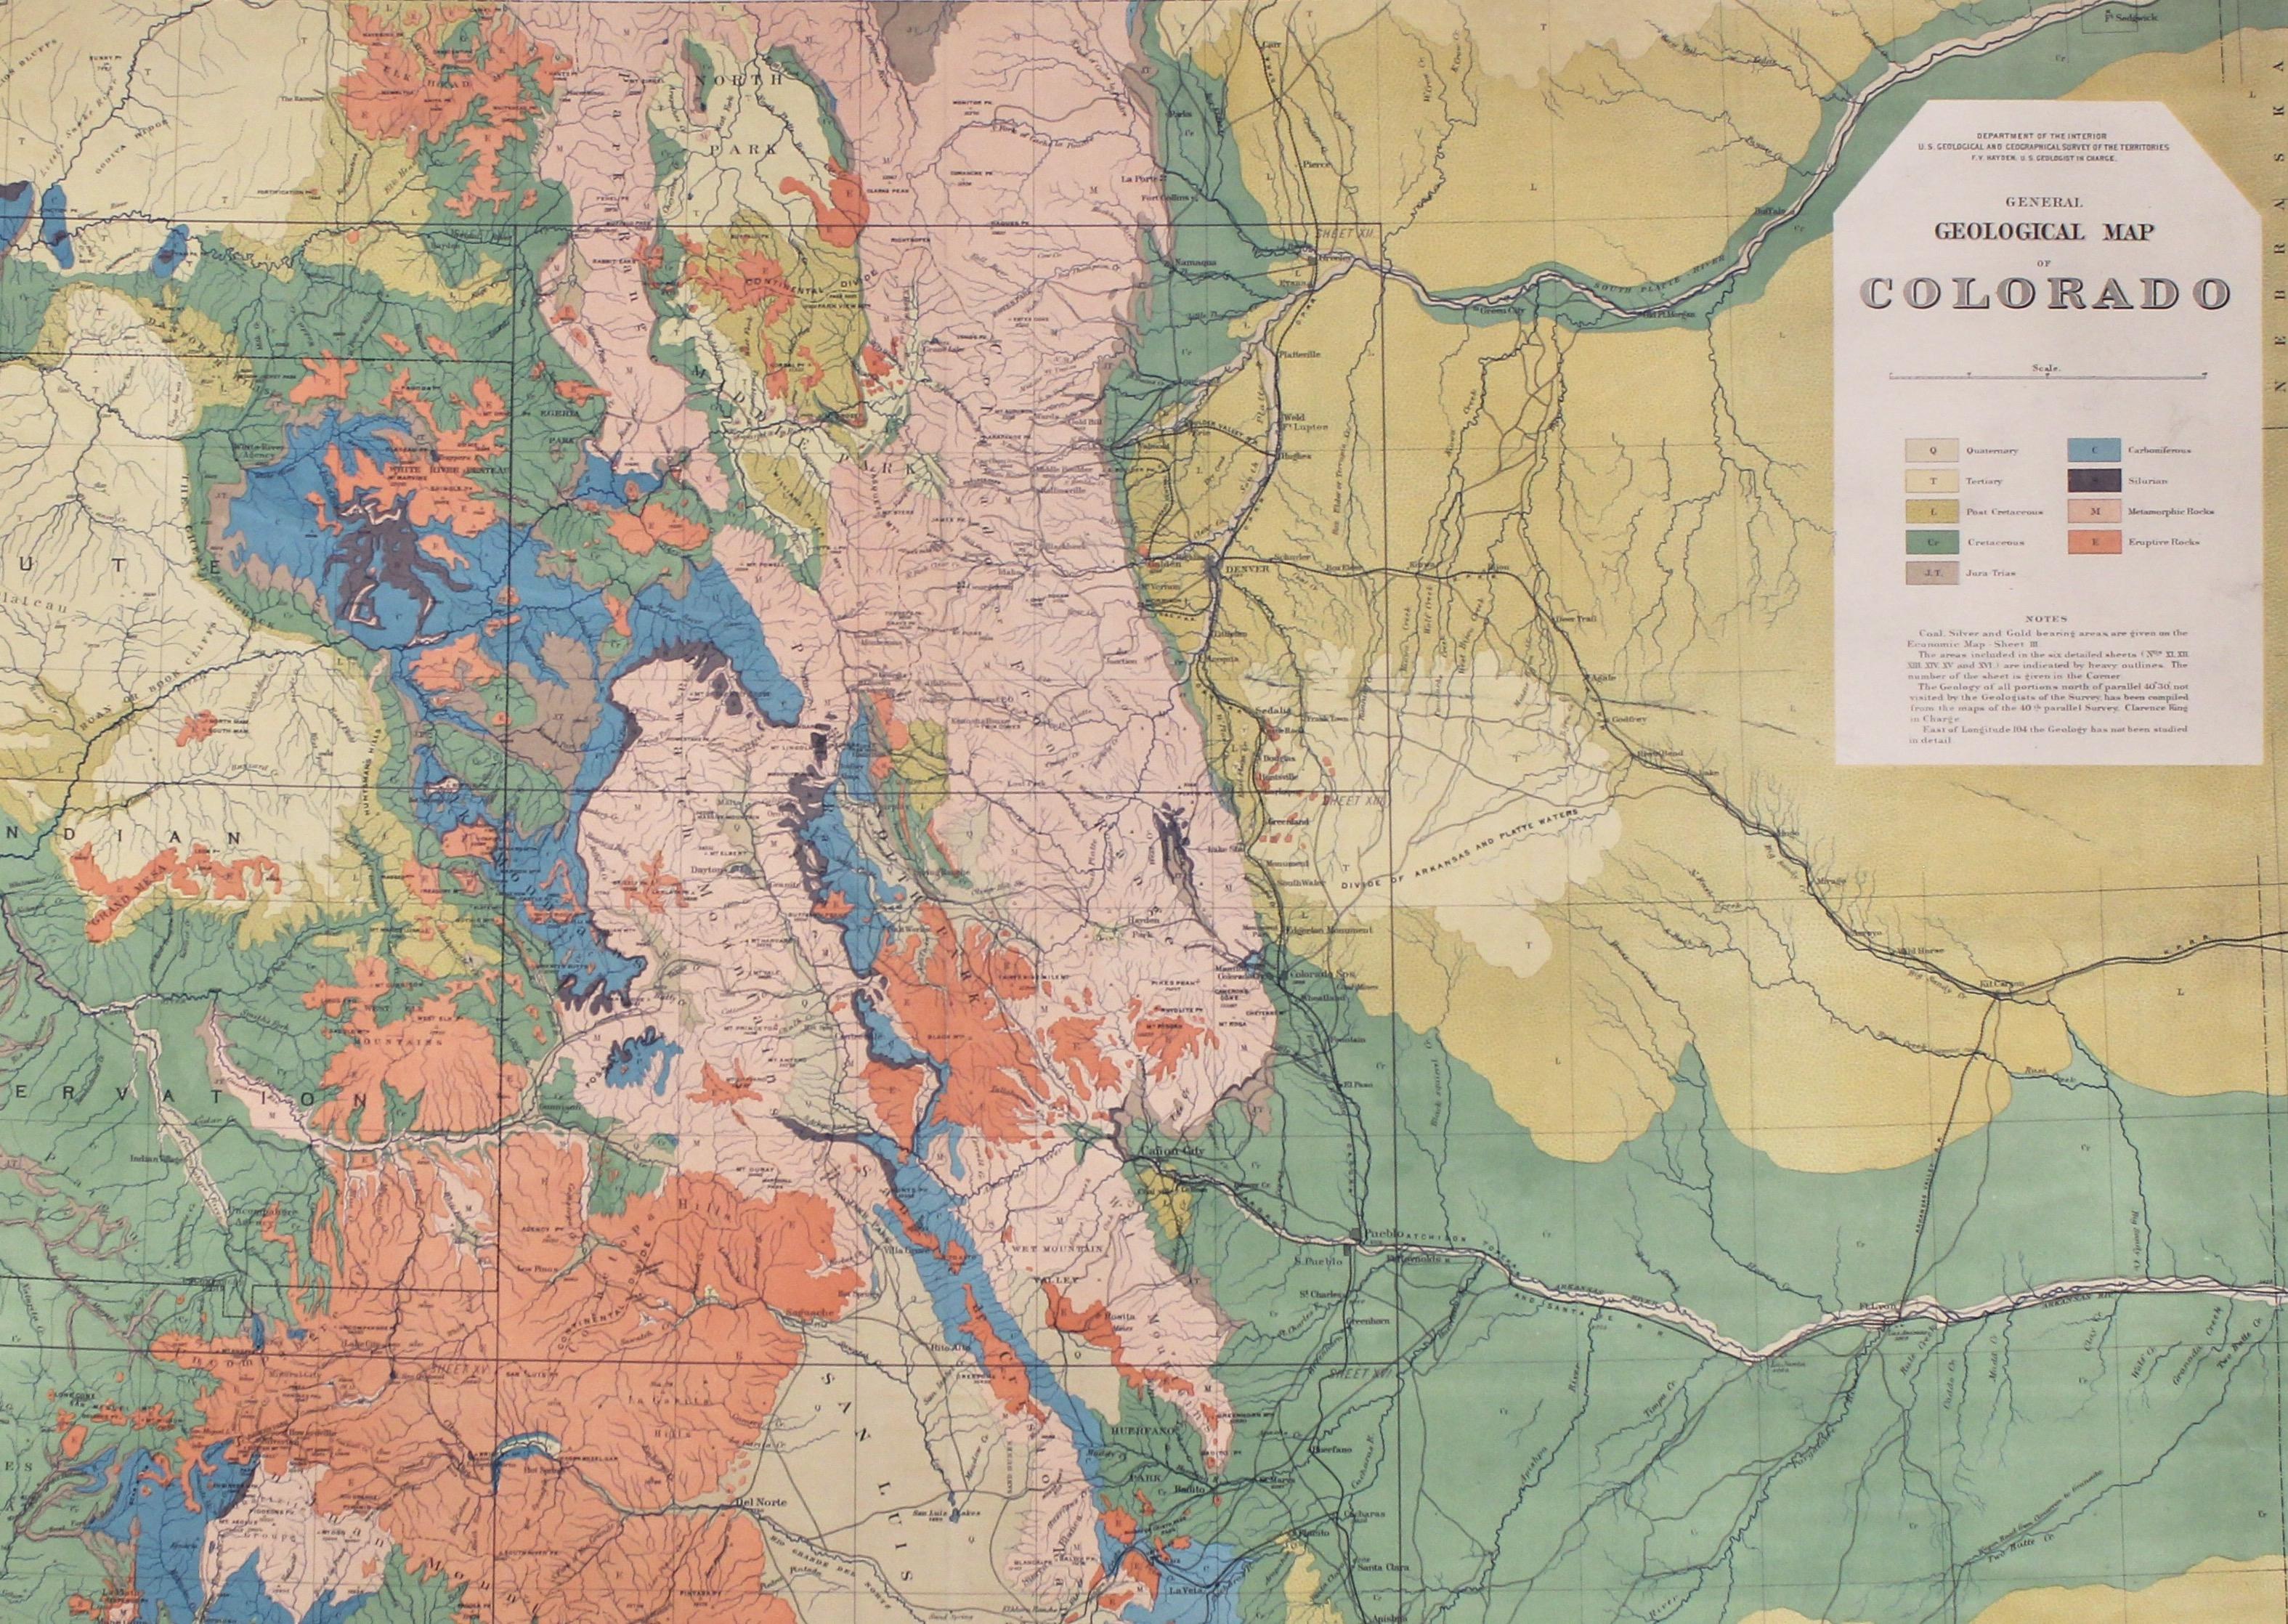 American 1877 General Geological Map of Colorado by F. V. Hayden